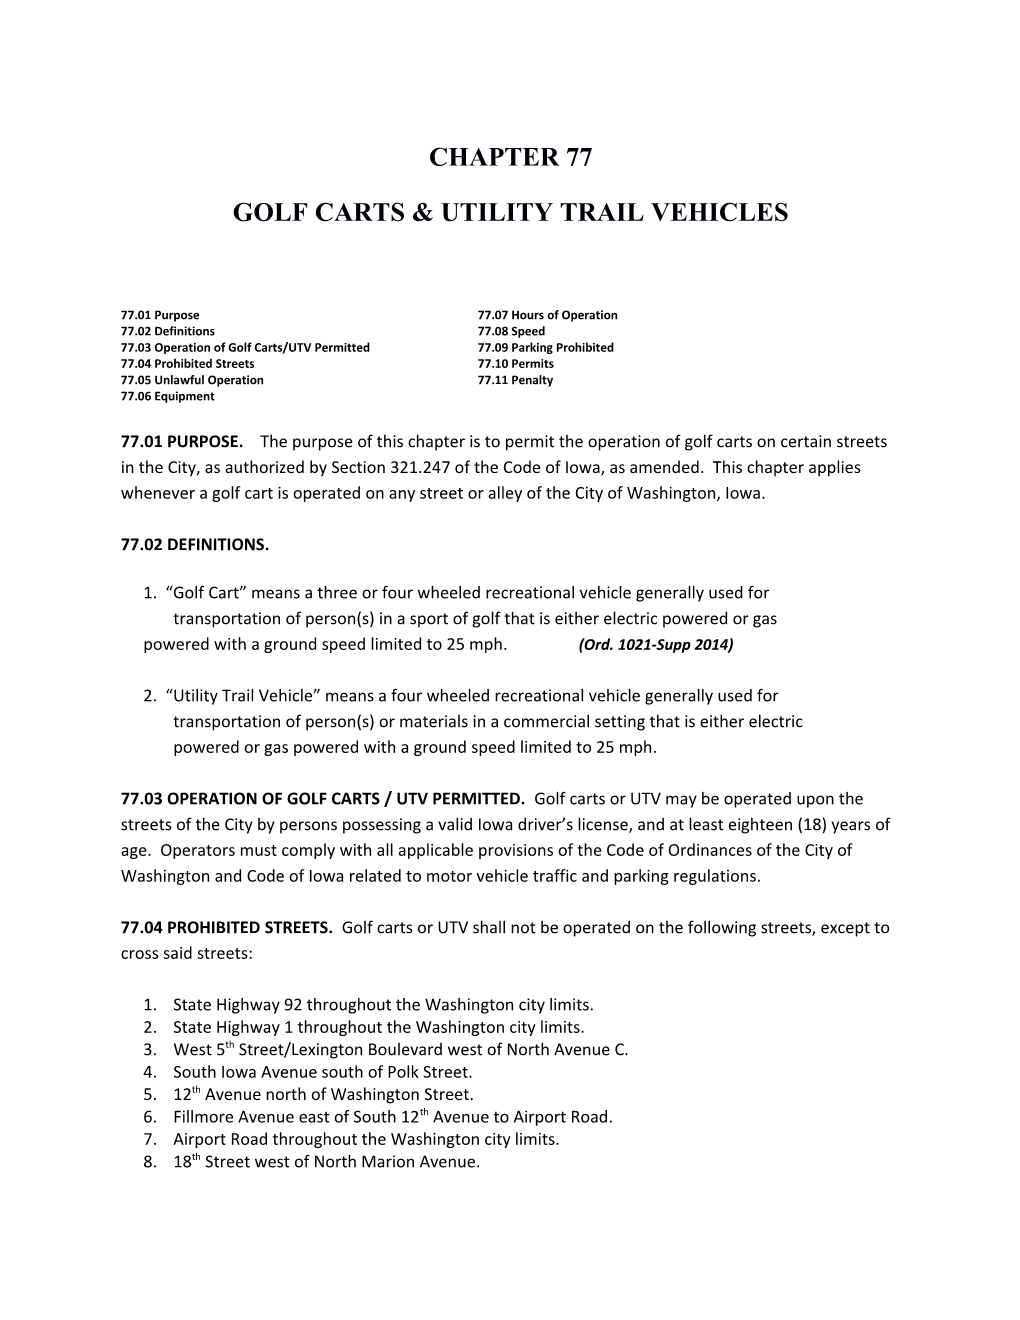 Golf Carts & Utility Trail Vehicles